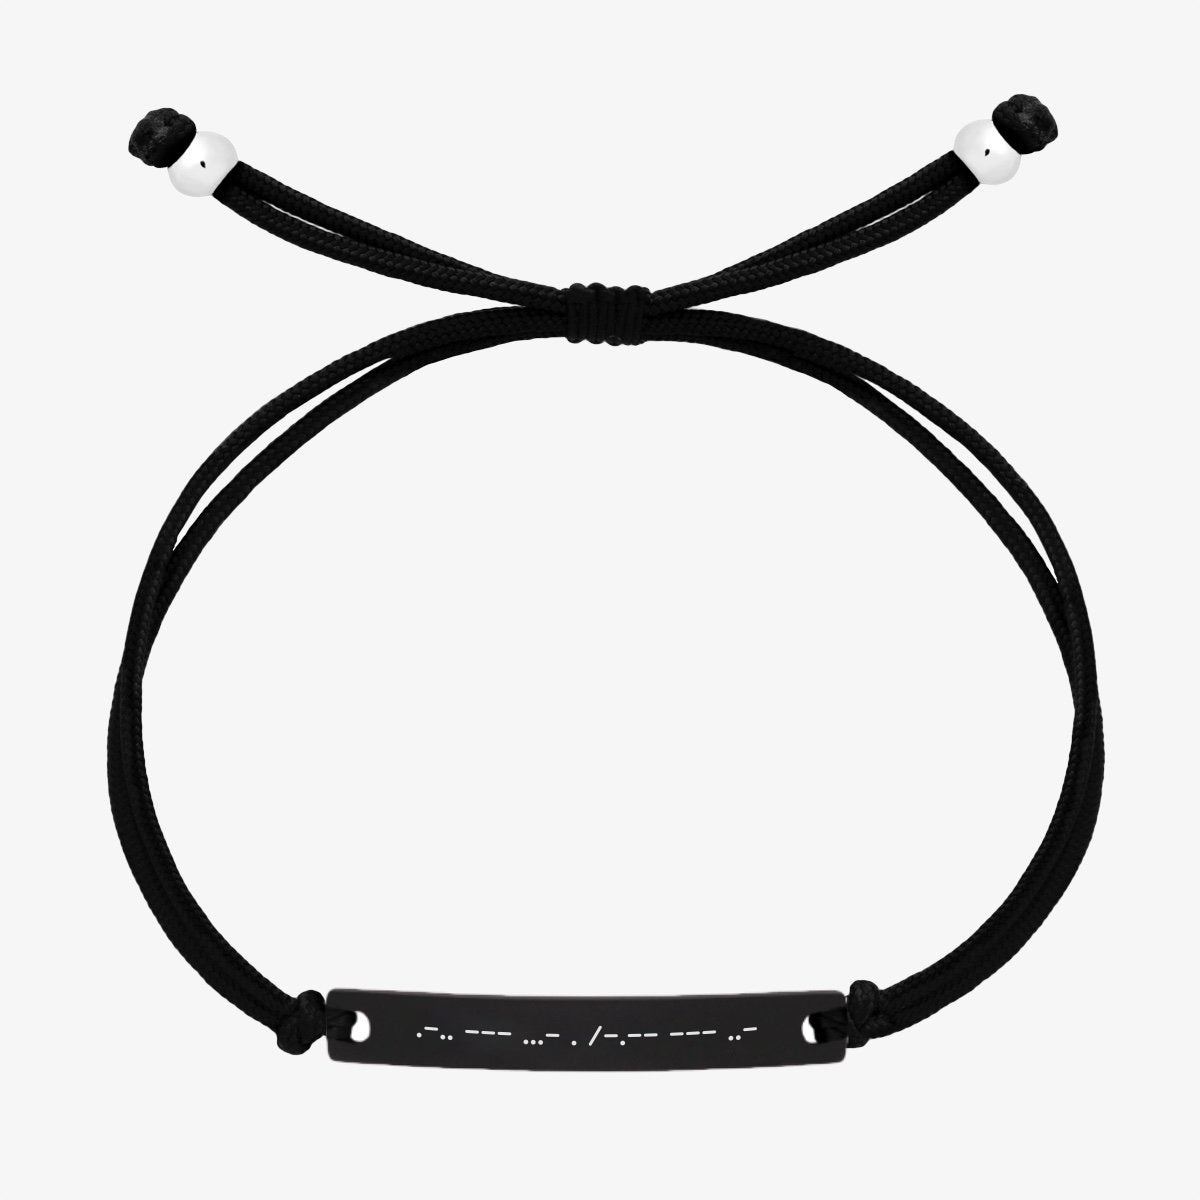 Black thread bracelet with morse code engraved on a black bar